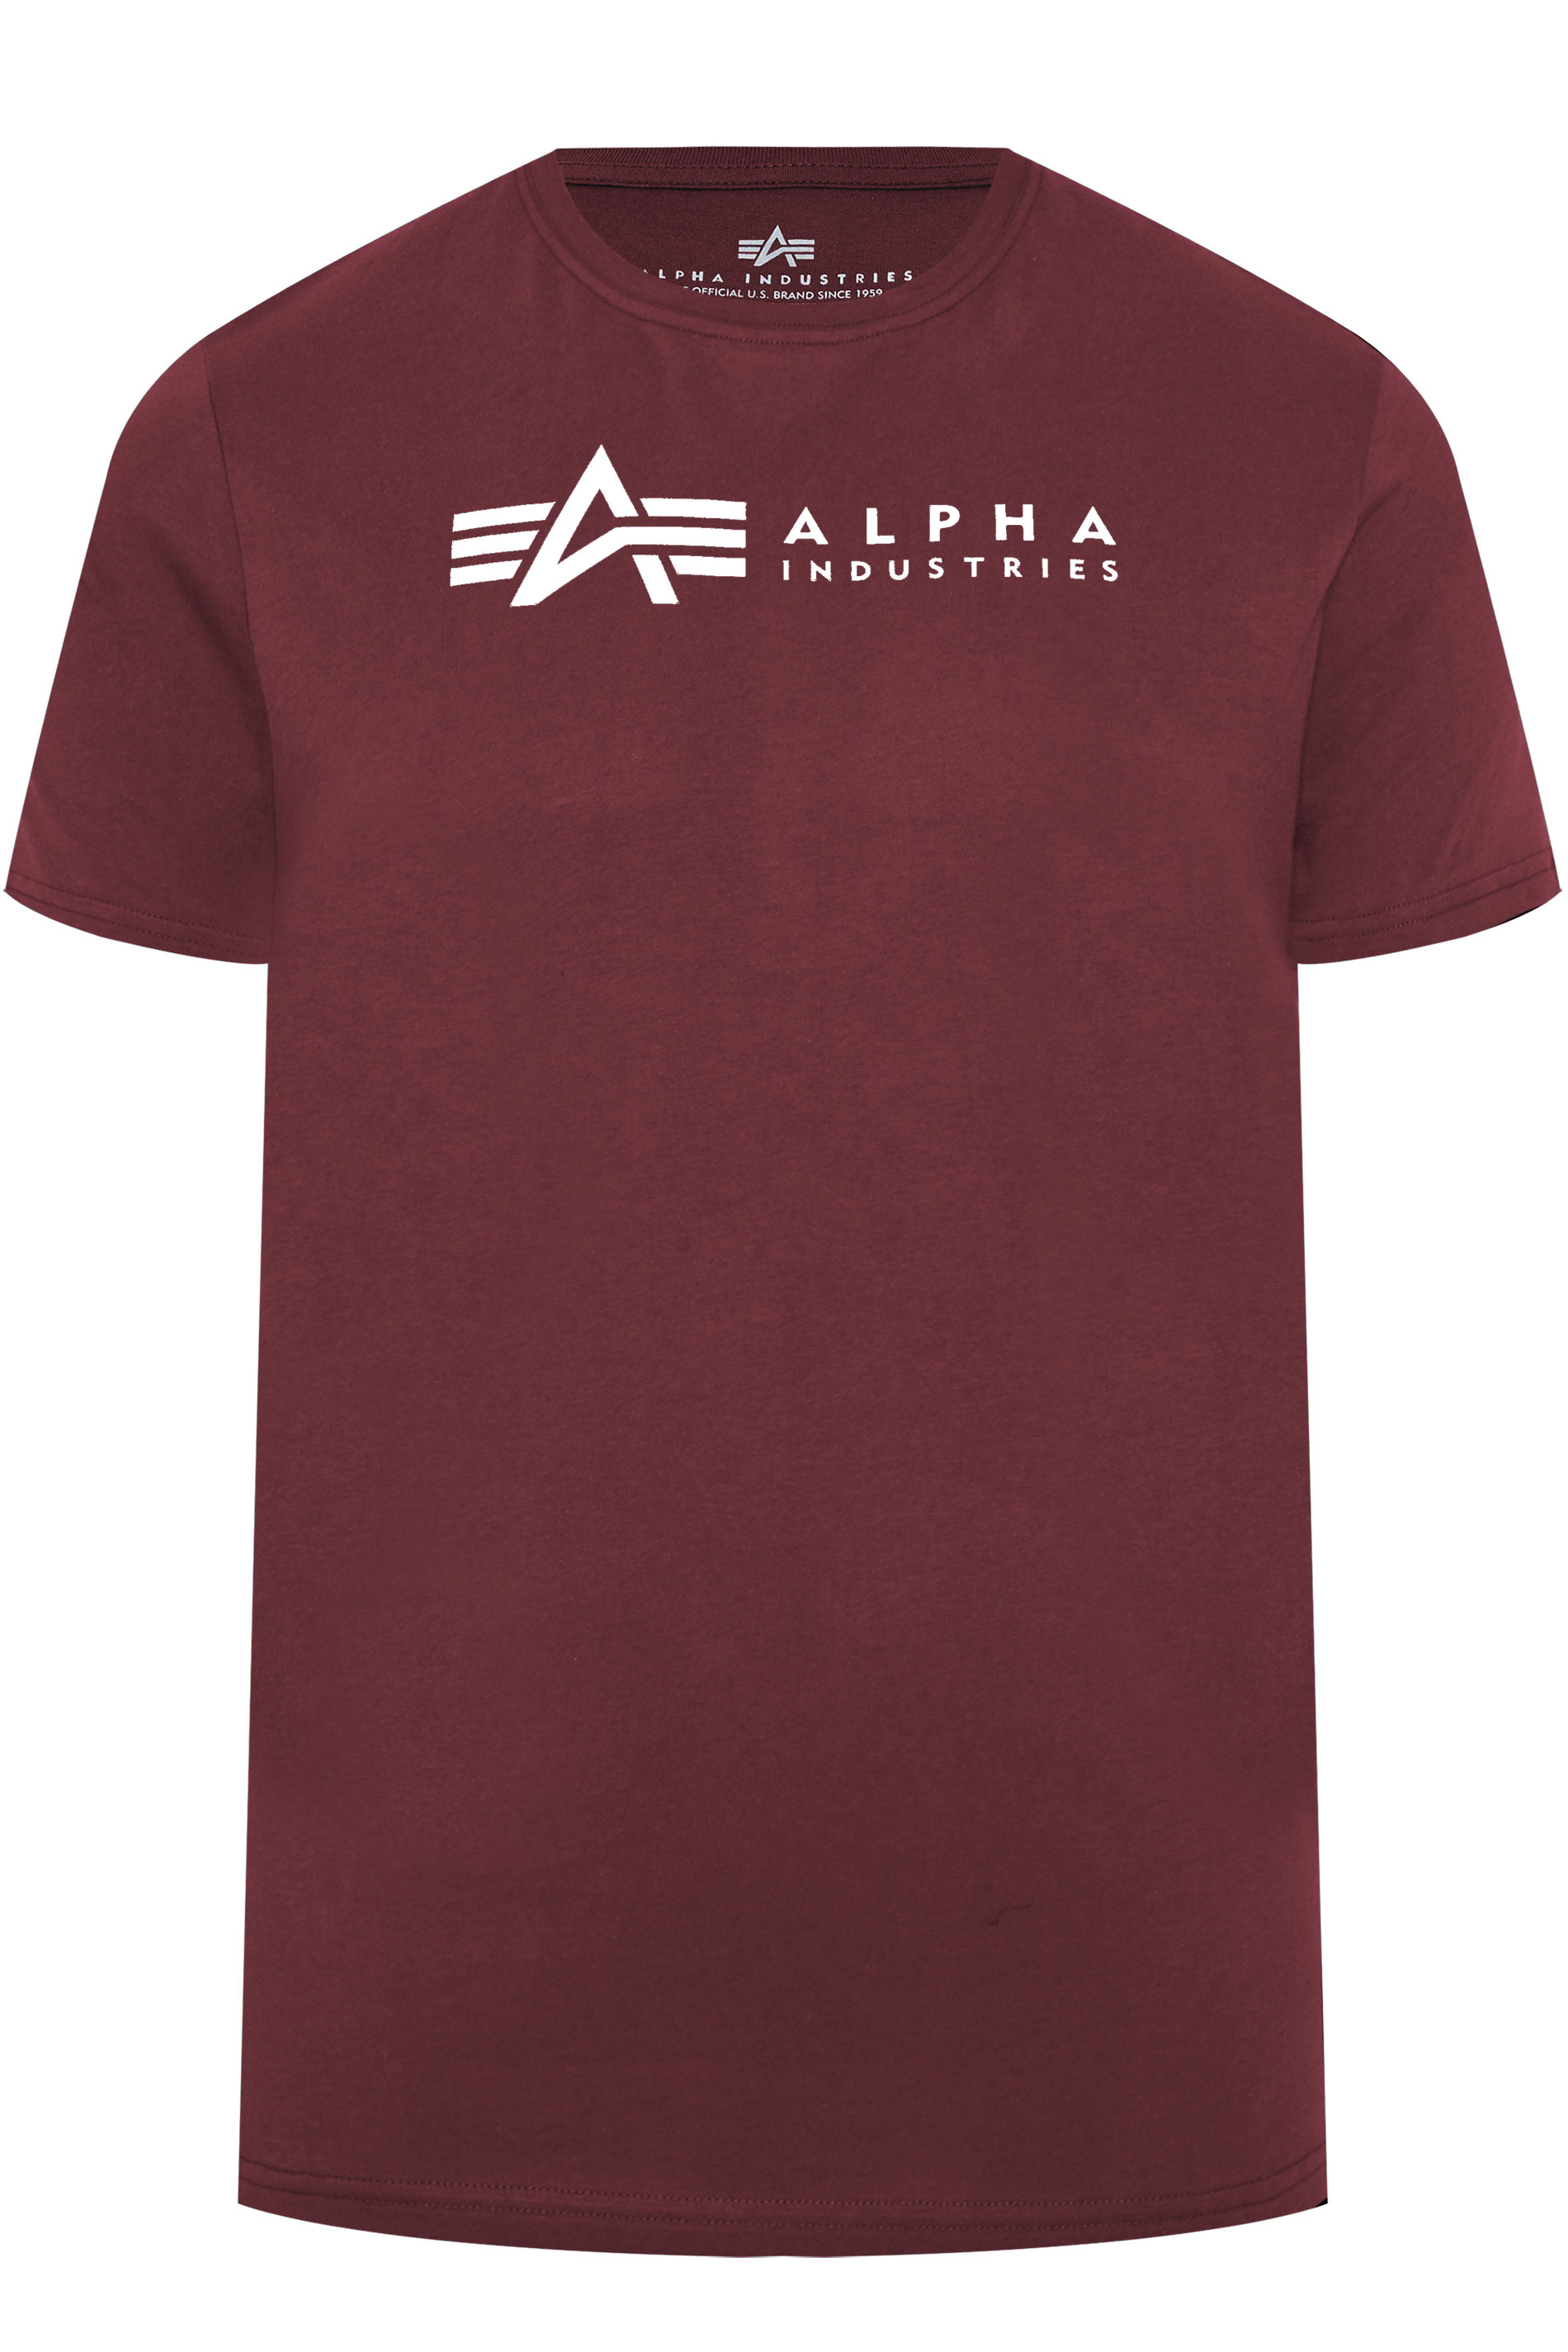 ALPHA T-Shirts 2 Pack | INDUSTRIES Burgundy Red BadRhino Logo